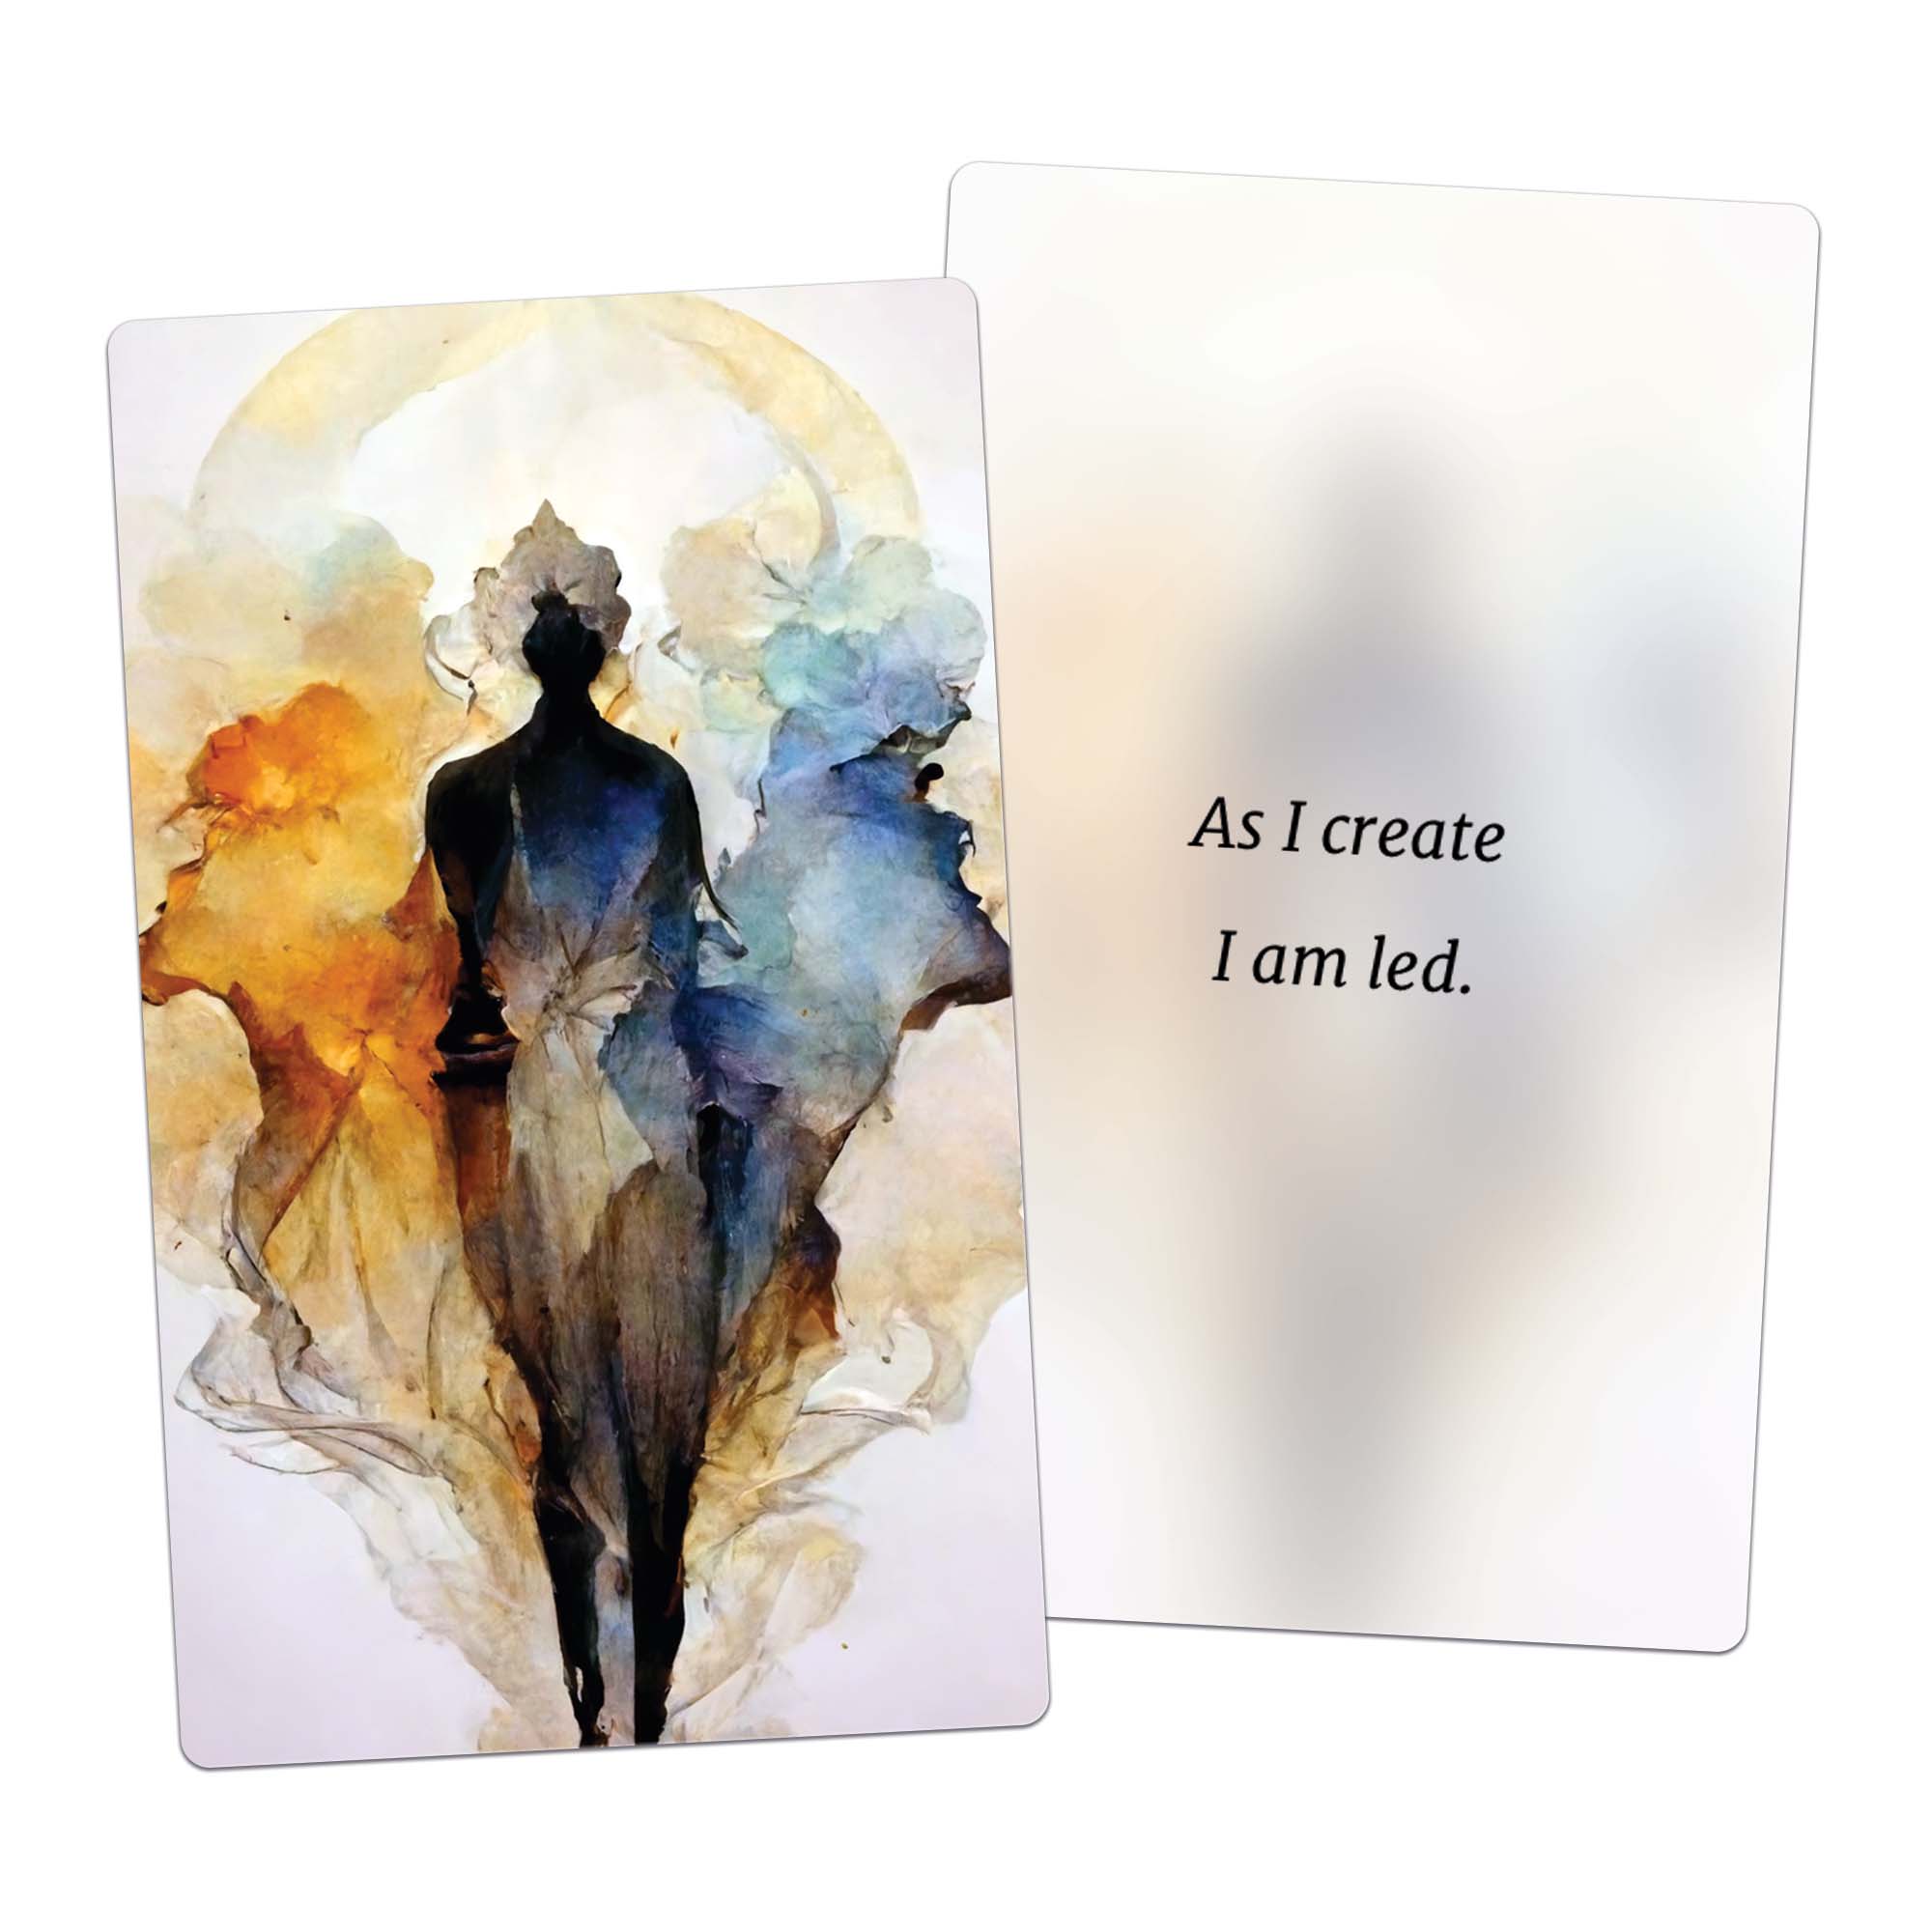 As I create, I am led. (AFFIRMATION CARD)